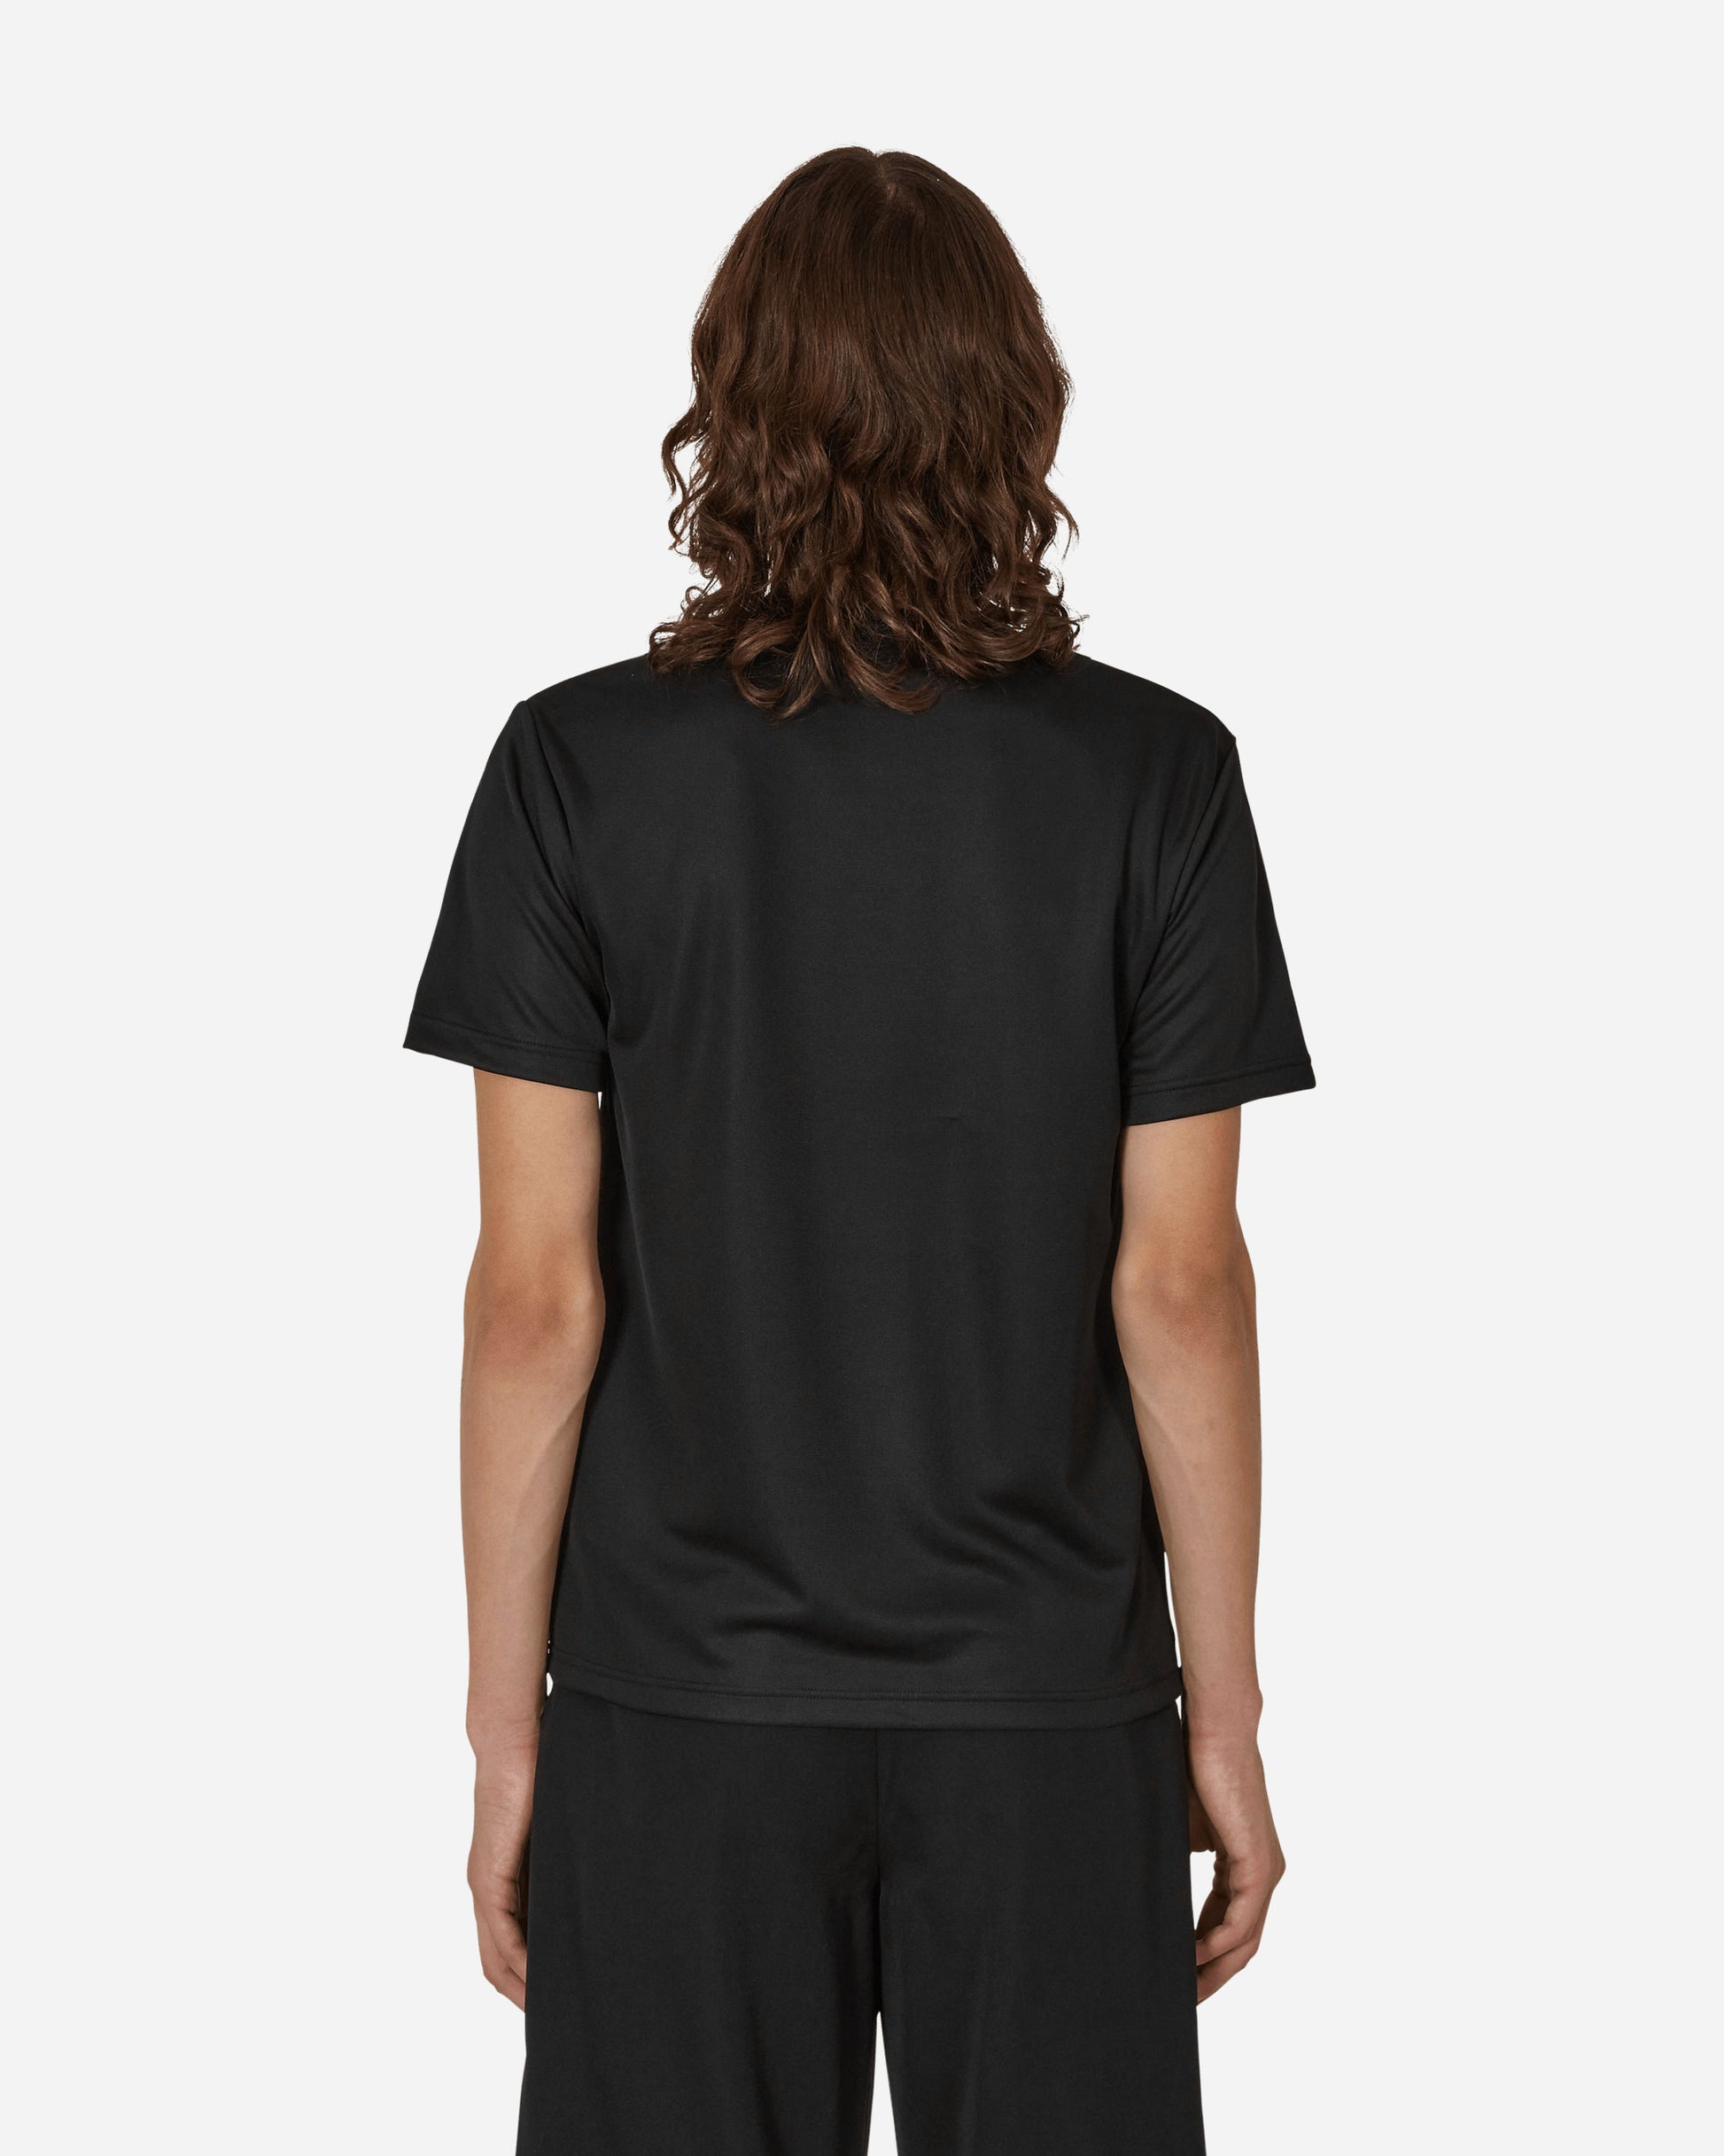 Comme Des Garçons Black Unisex T-Shirt Black T-Shirts Shortsleeve 1J-T102-W22  1